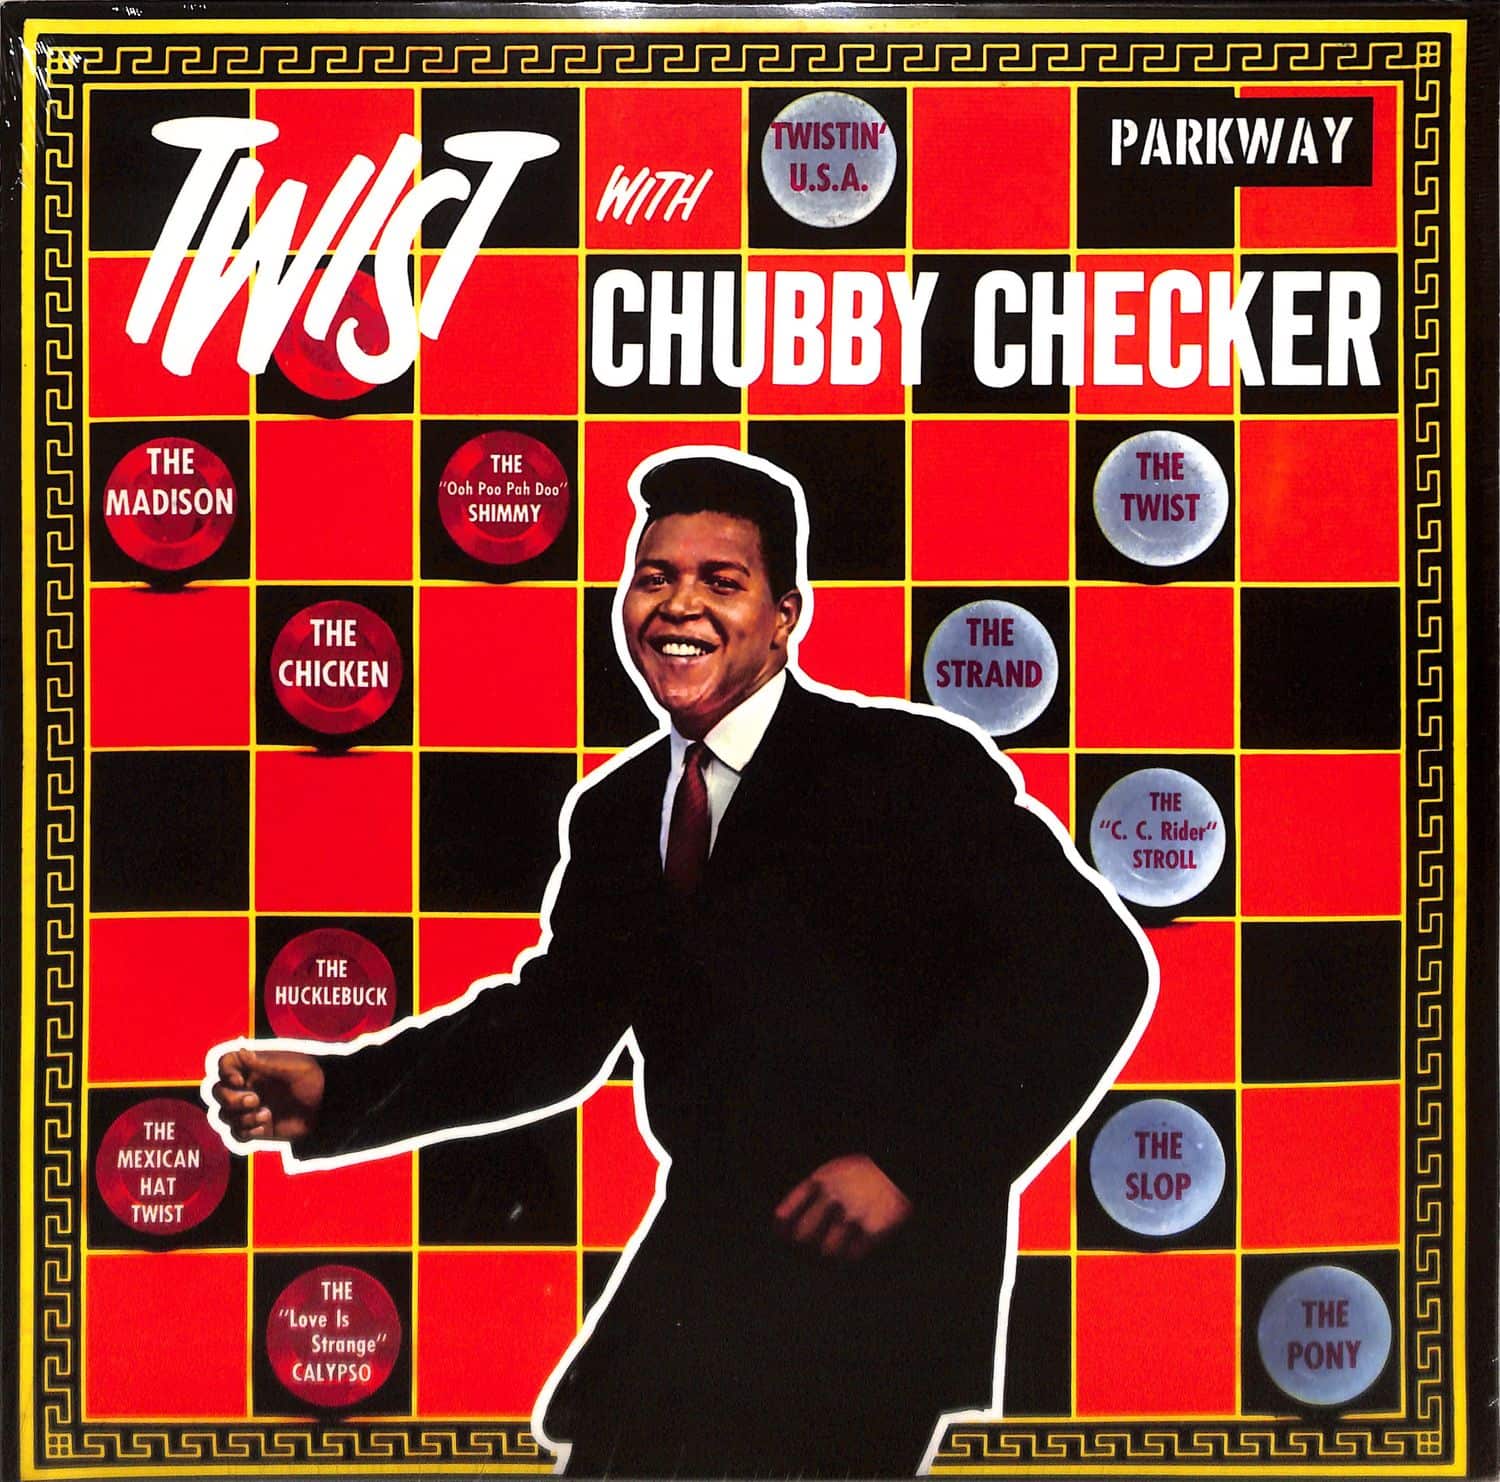 Chubby Checker - TWIST WITH CHUBBY CHECKER 